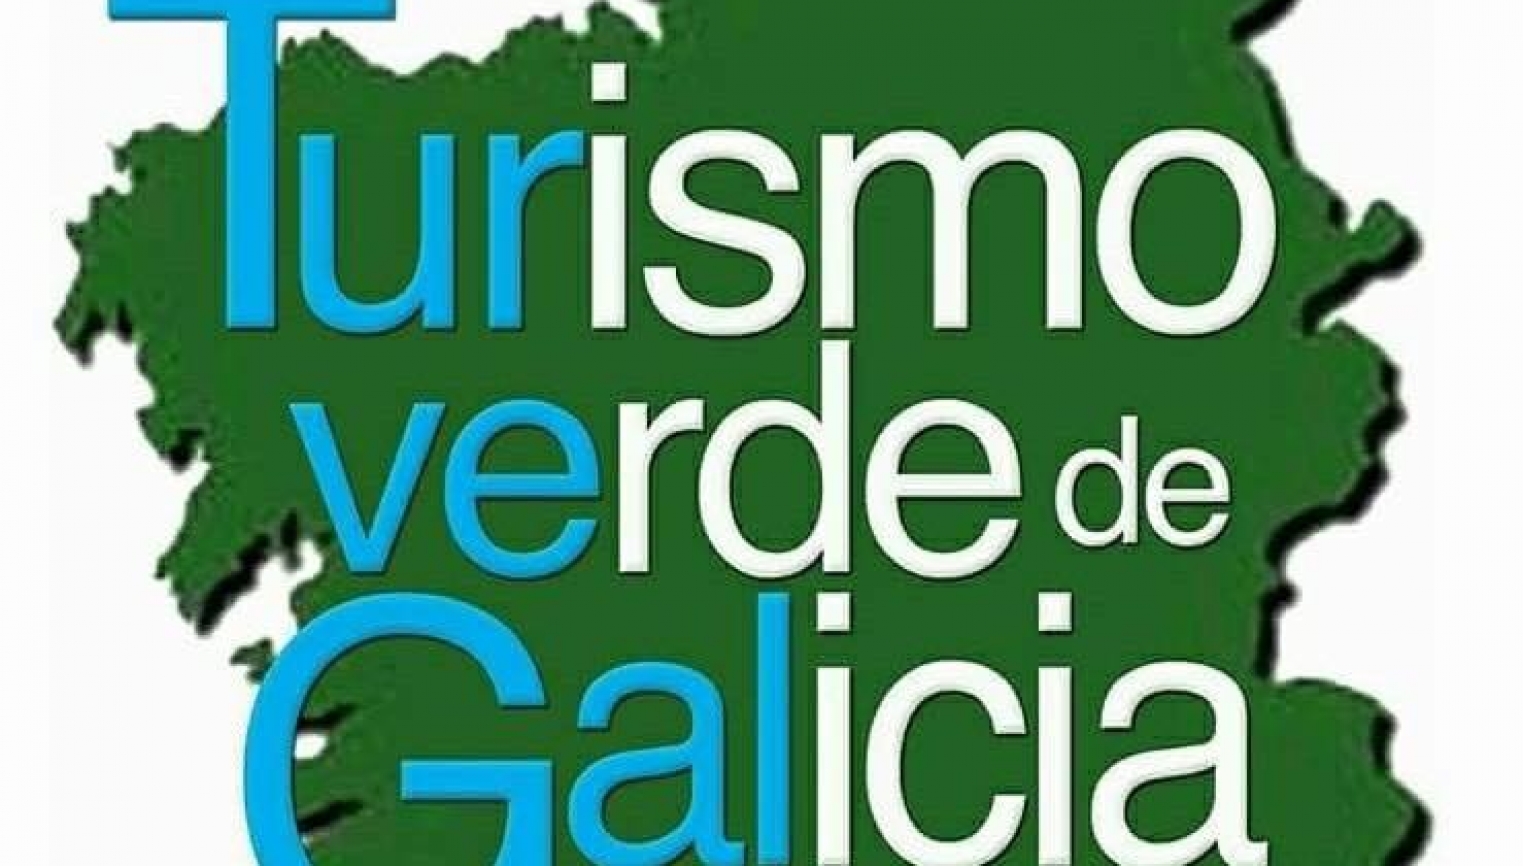 Turismo verde de Galicia - foto 1/1